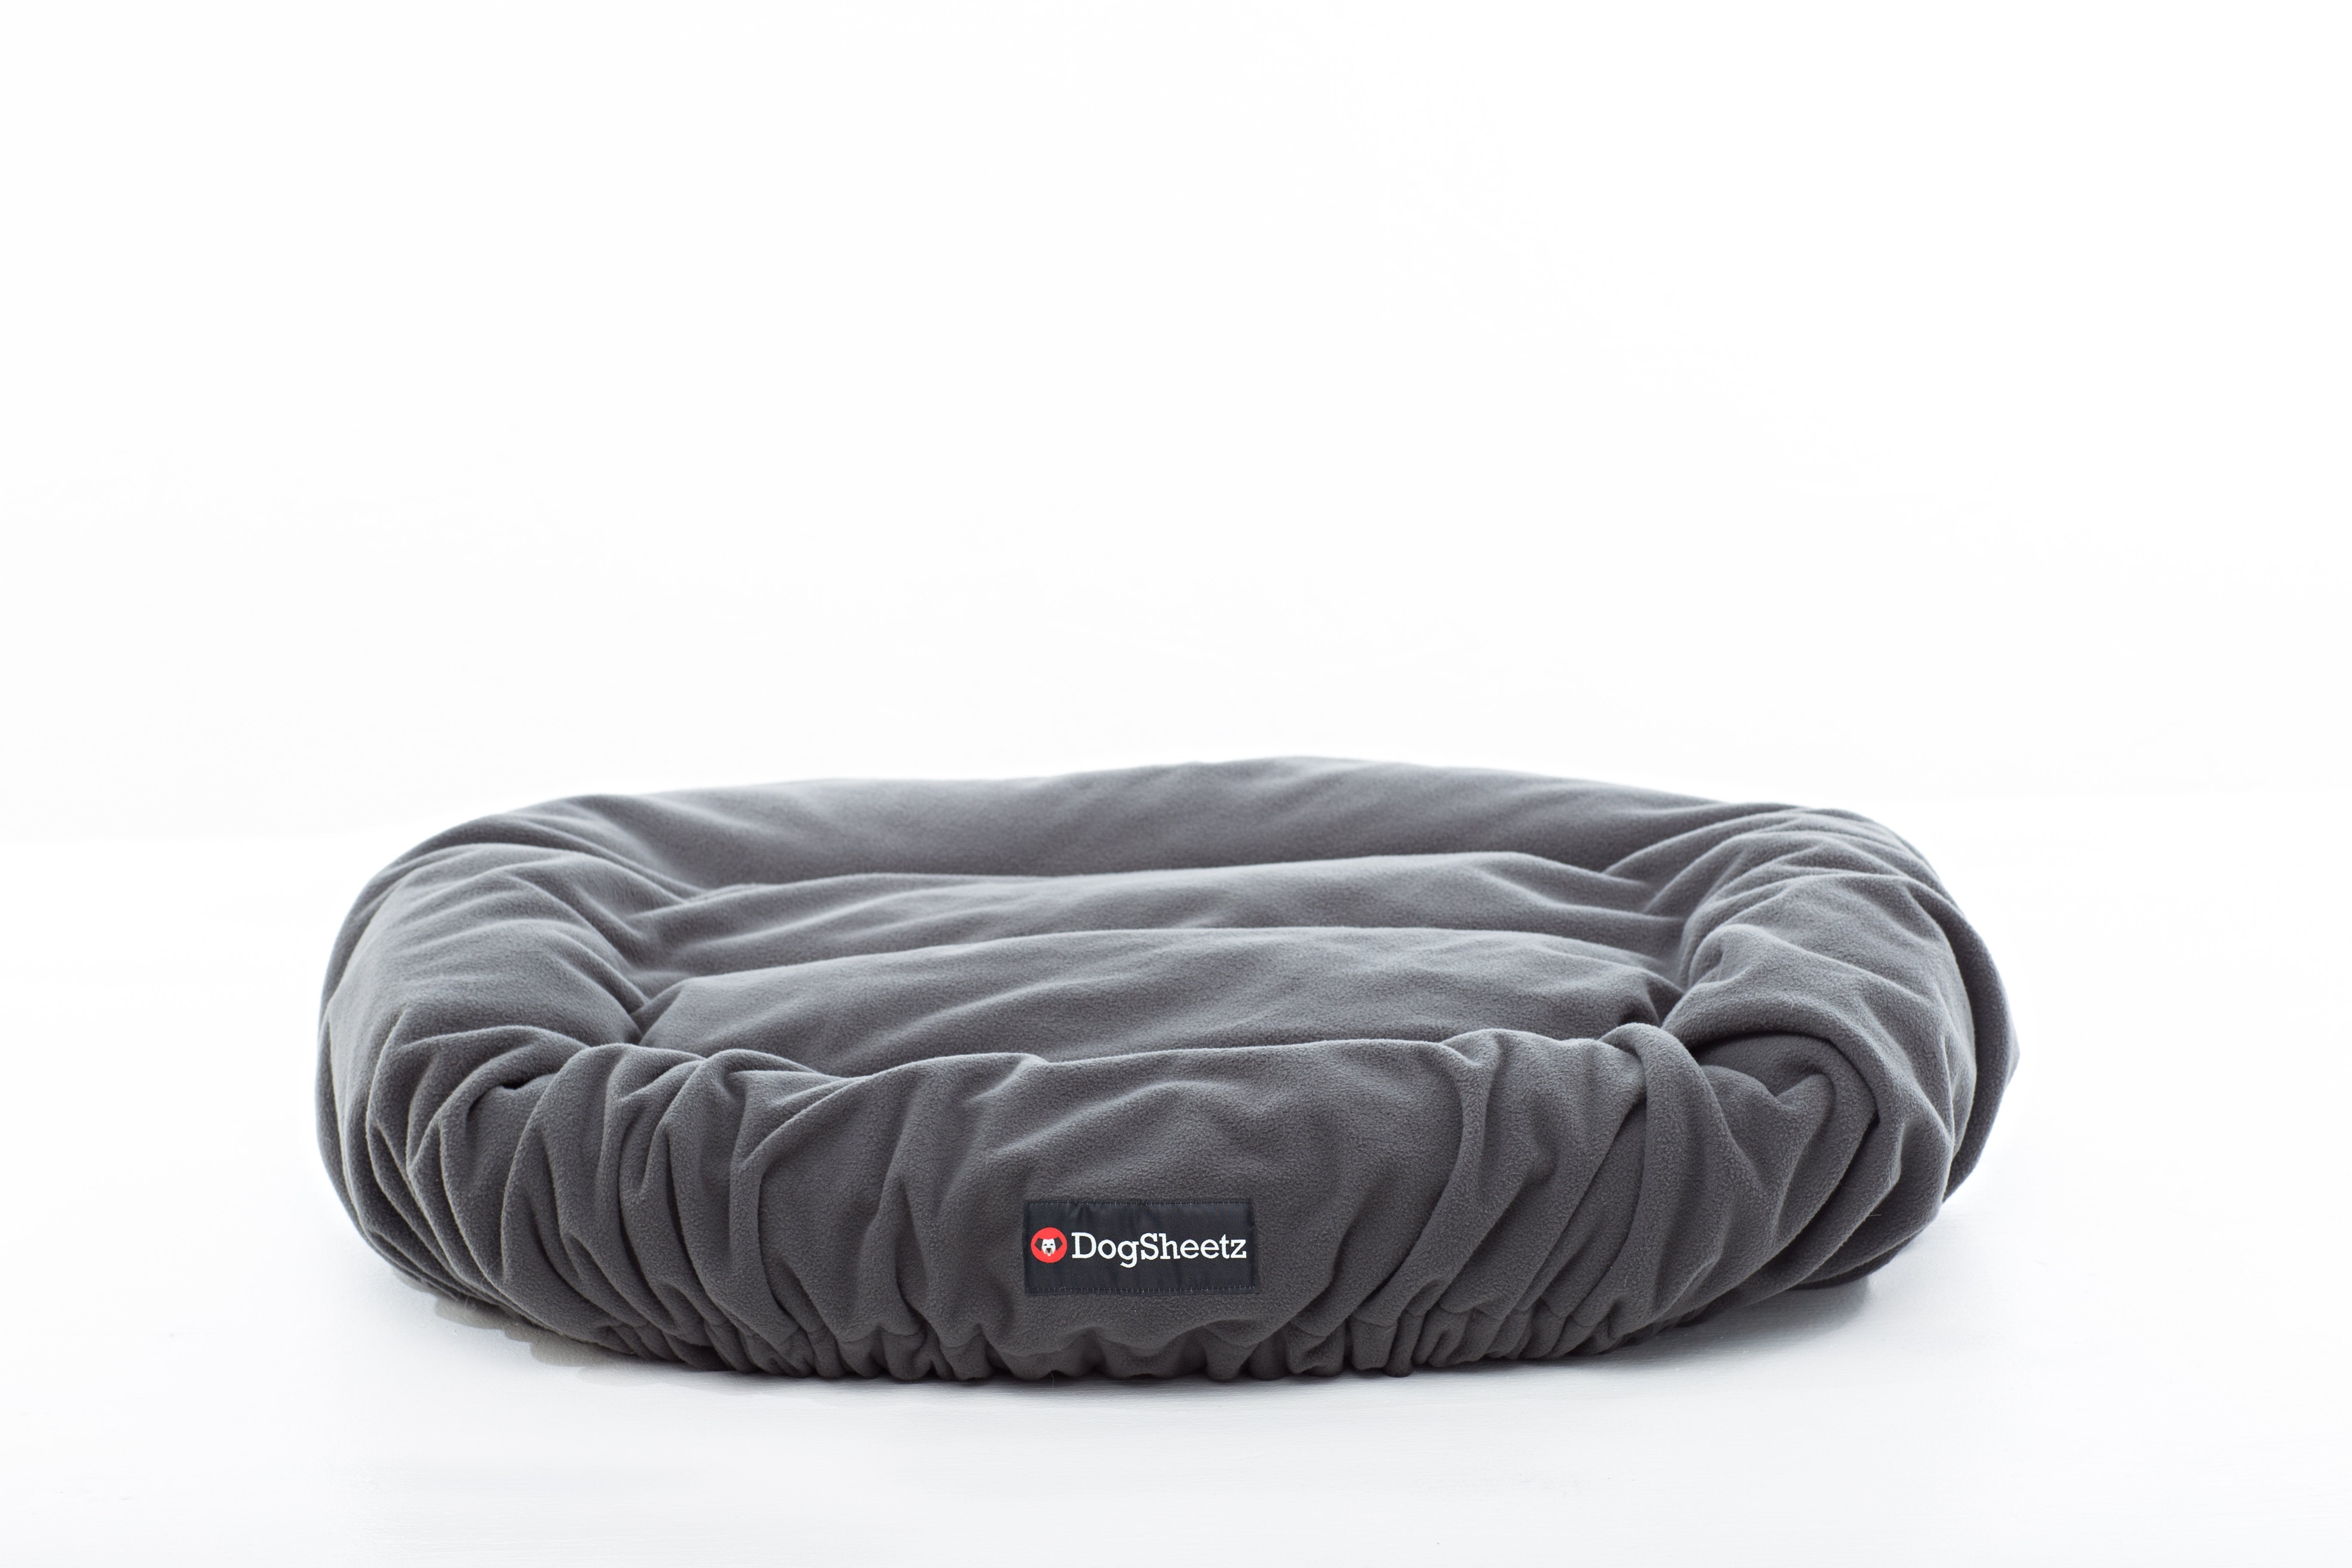 DogSheetz - Waterproof Dog Bed Cover